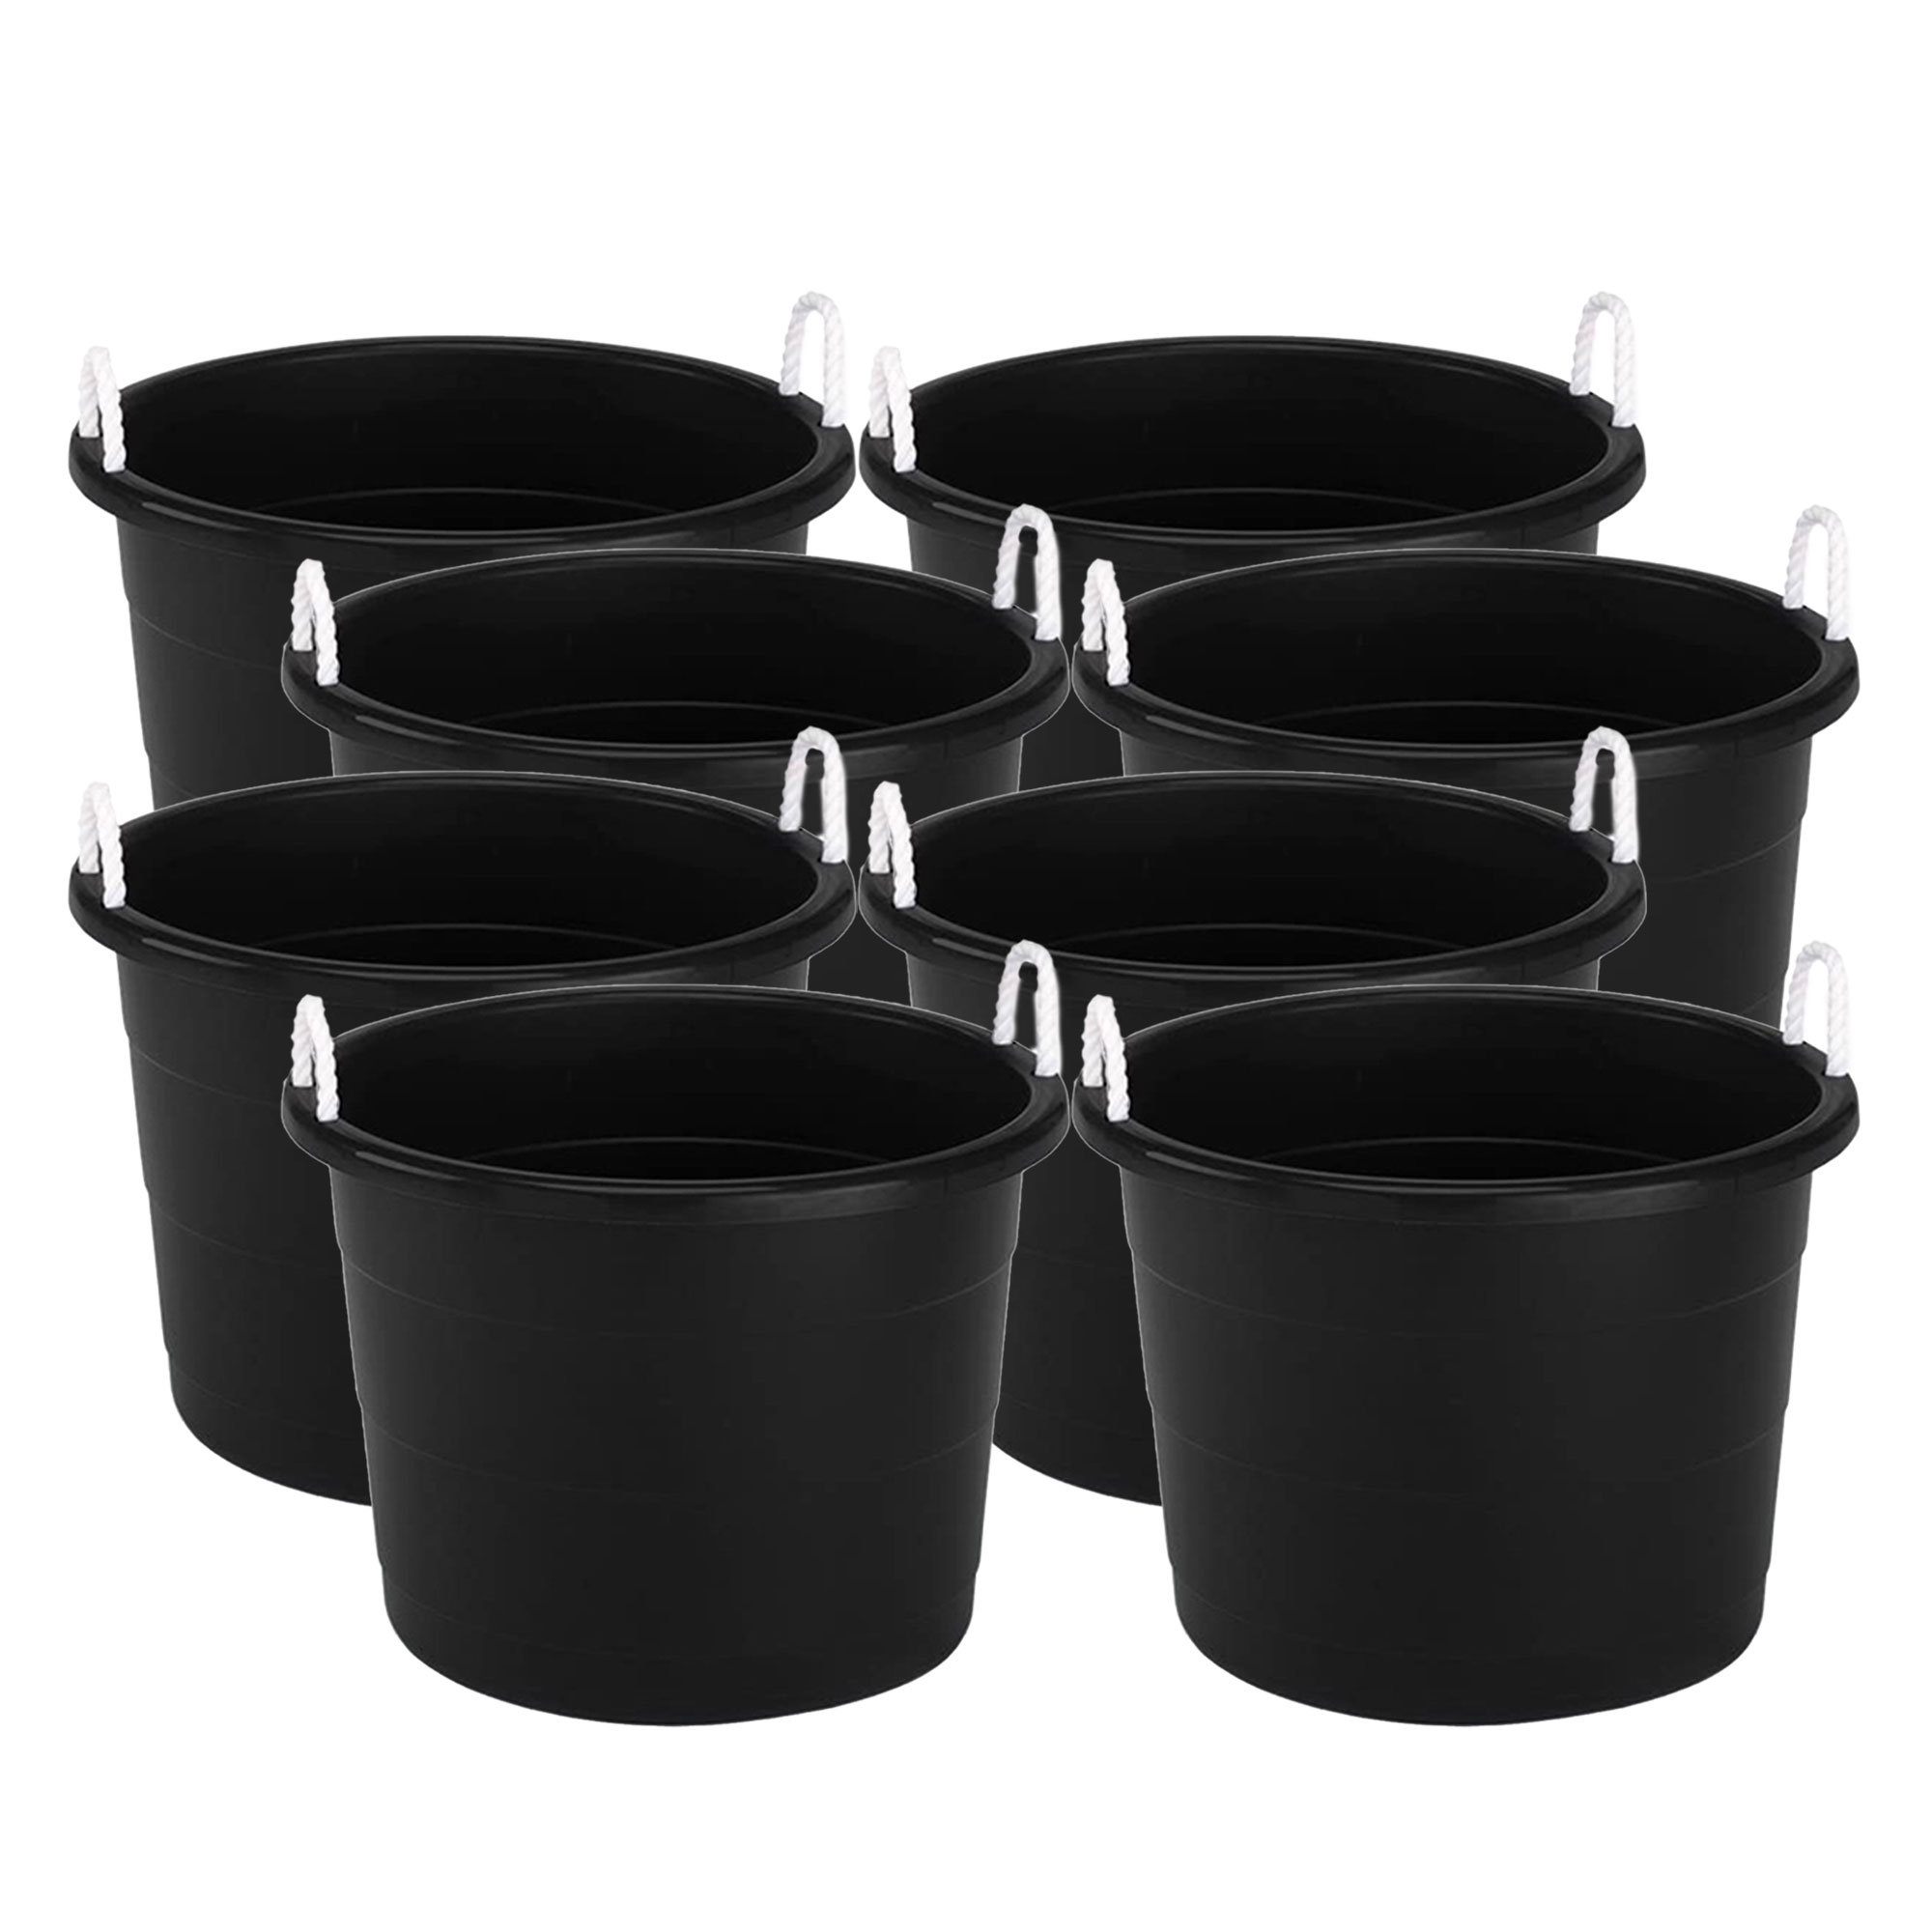 Homz 18 Gal Plastic Utility Storage Bucket Tub w/ Rope Handles